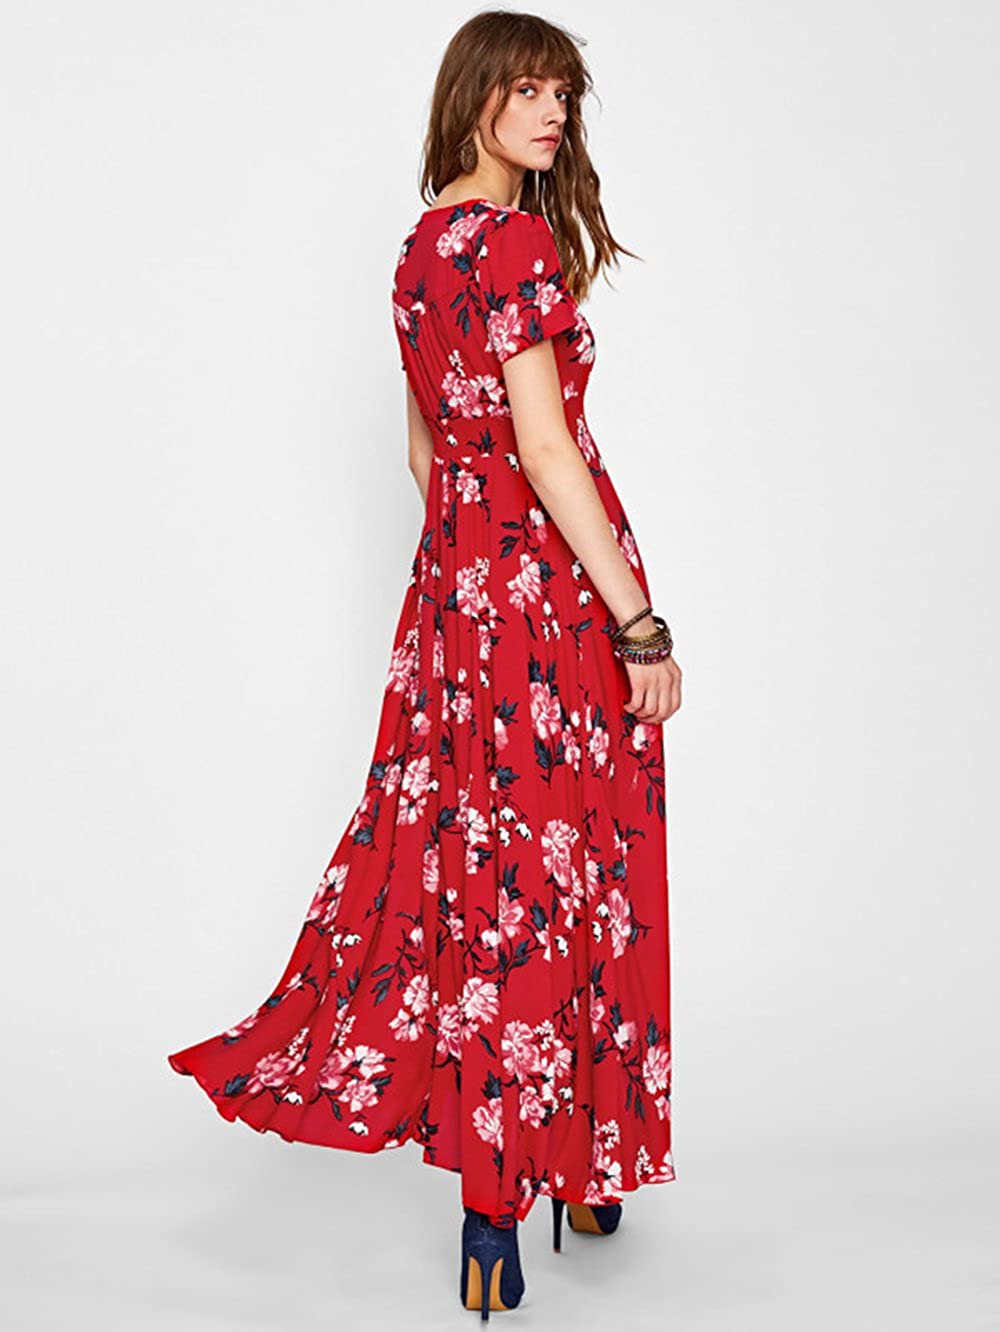 Milumia Women S Button Up Split Floral Print Flowy Party Maxi Dress Red Ebay